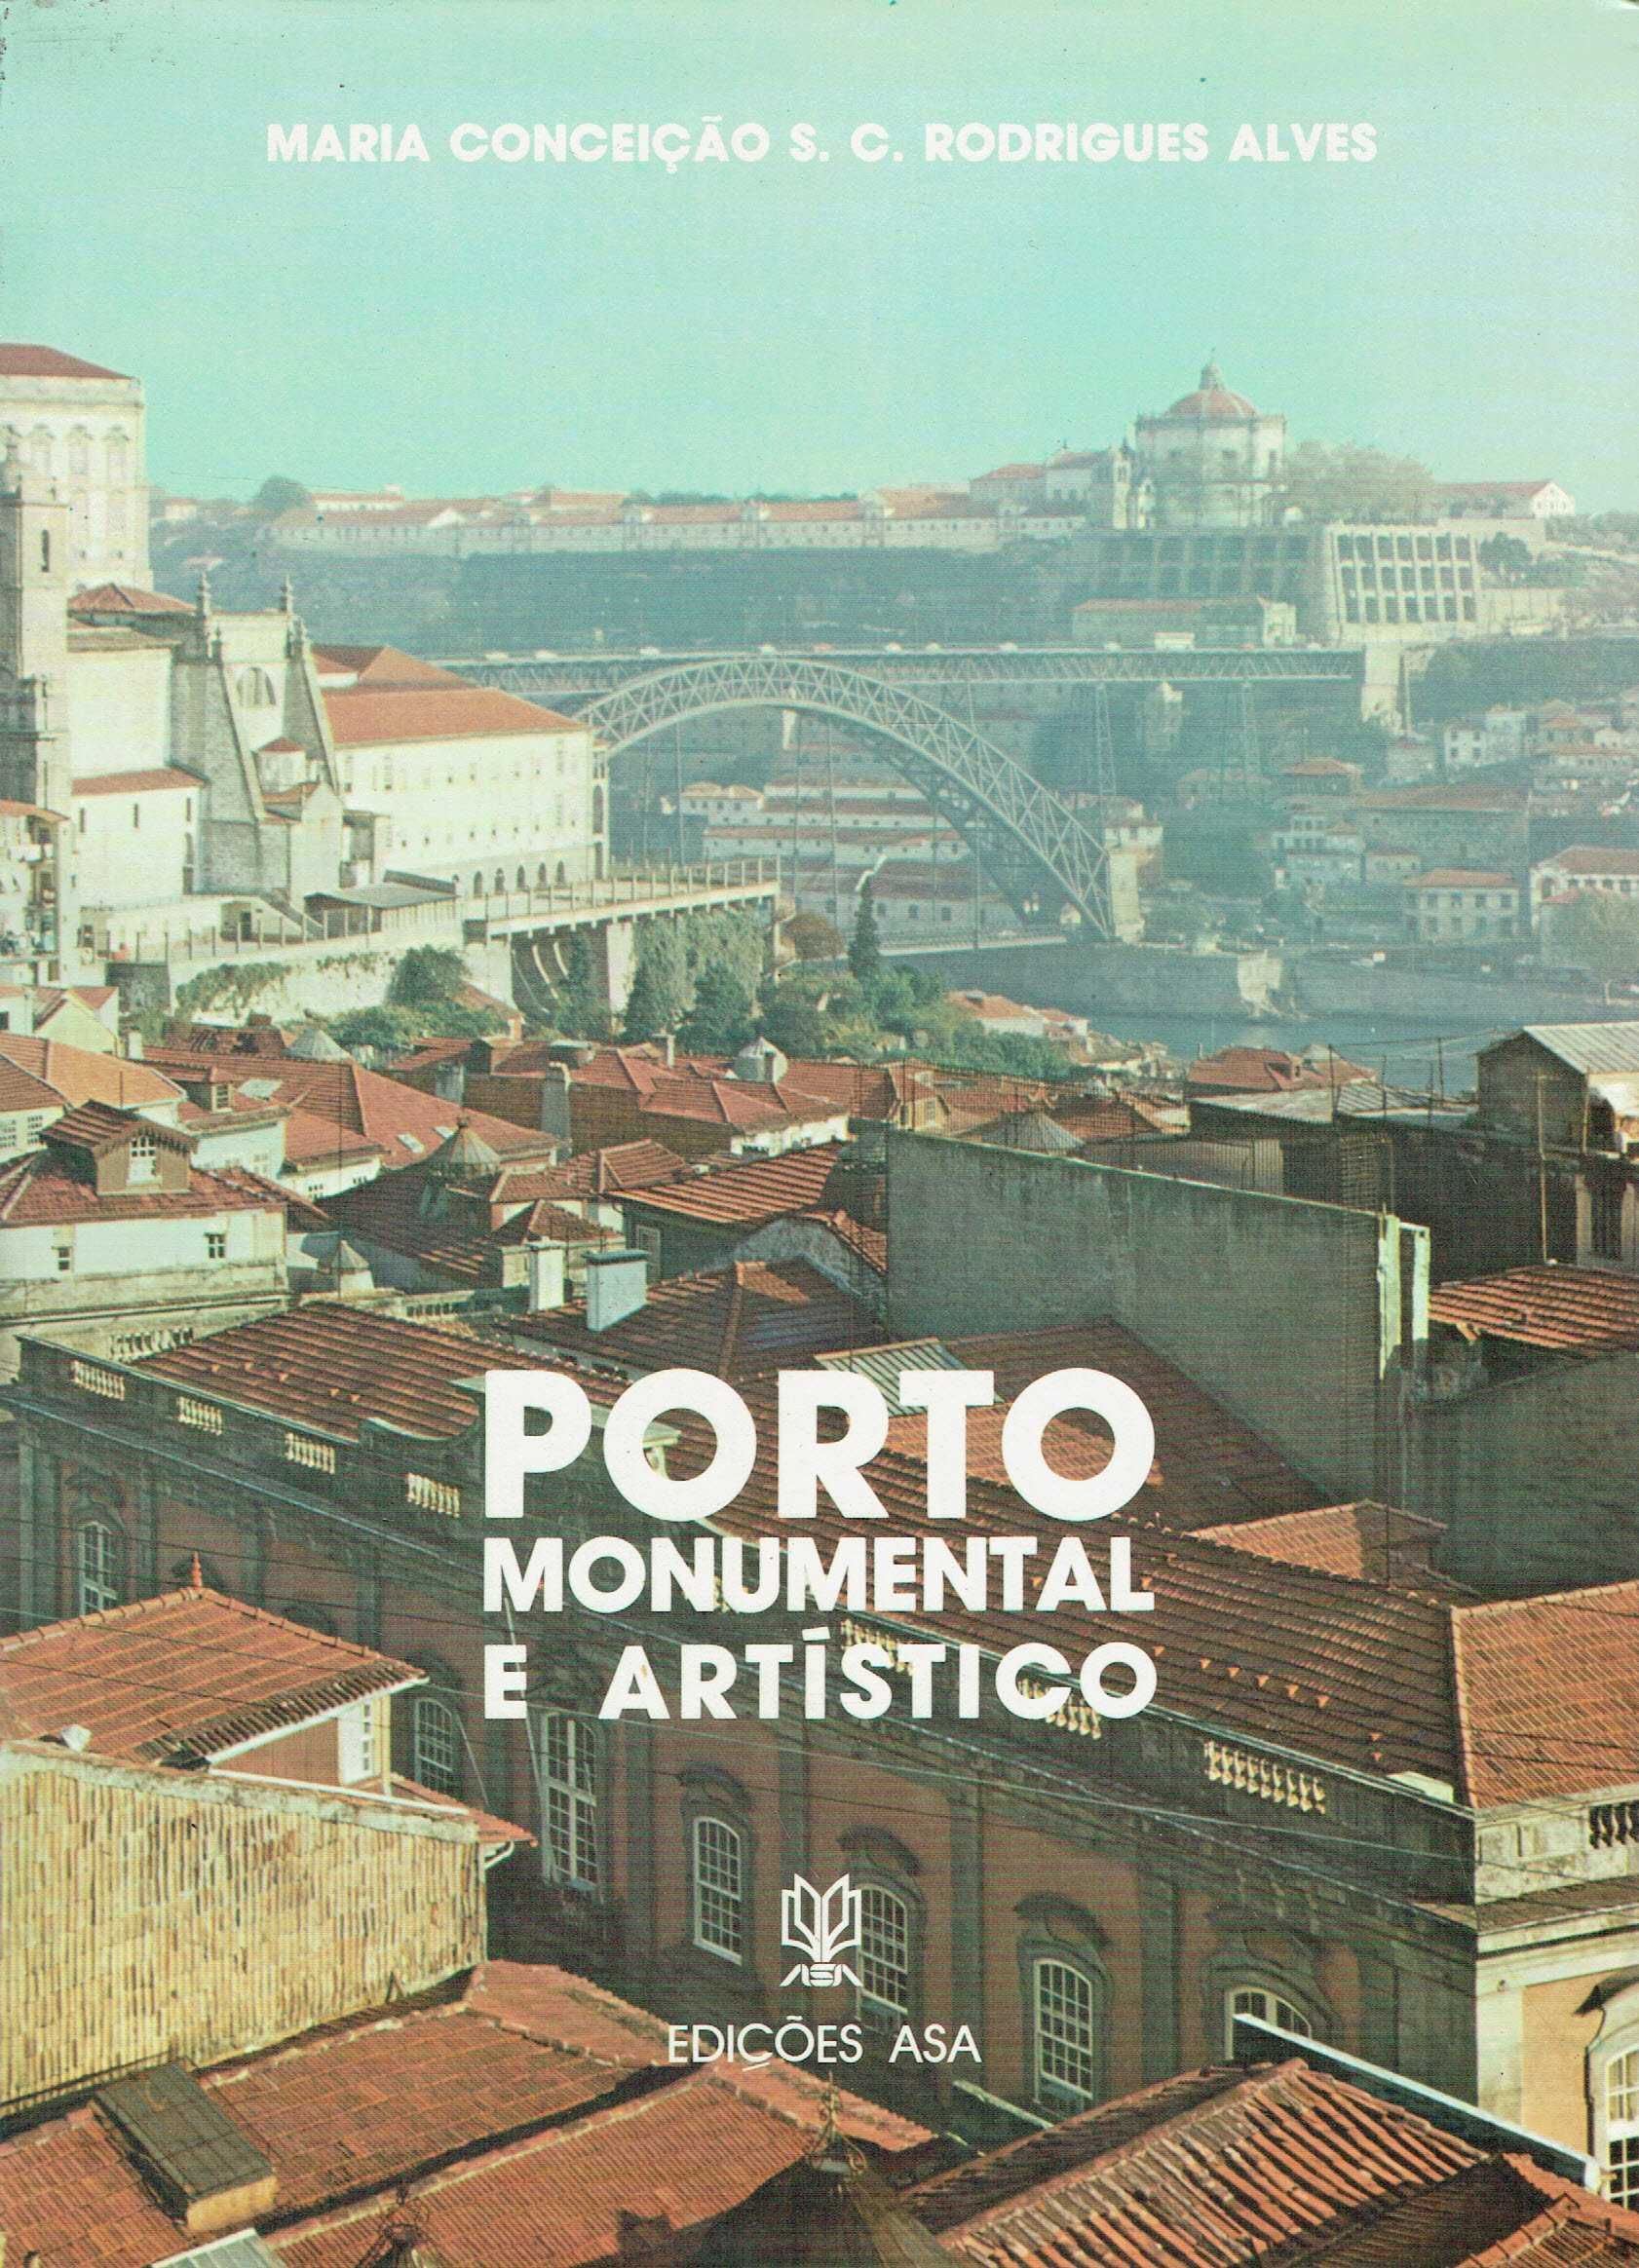 7331

Porto monumental e artístico